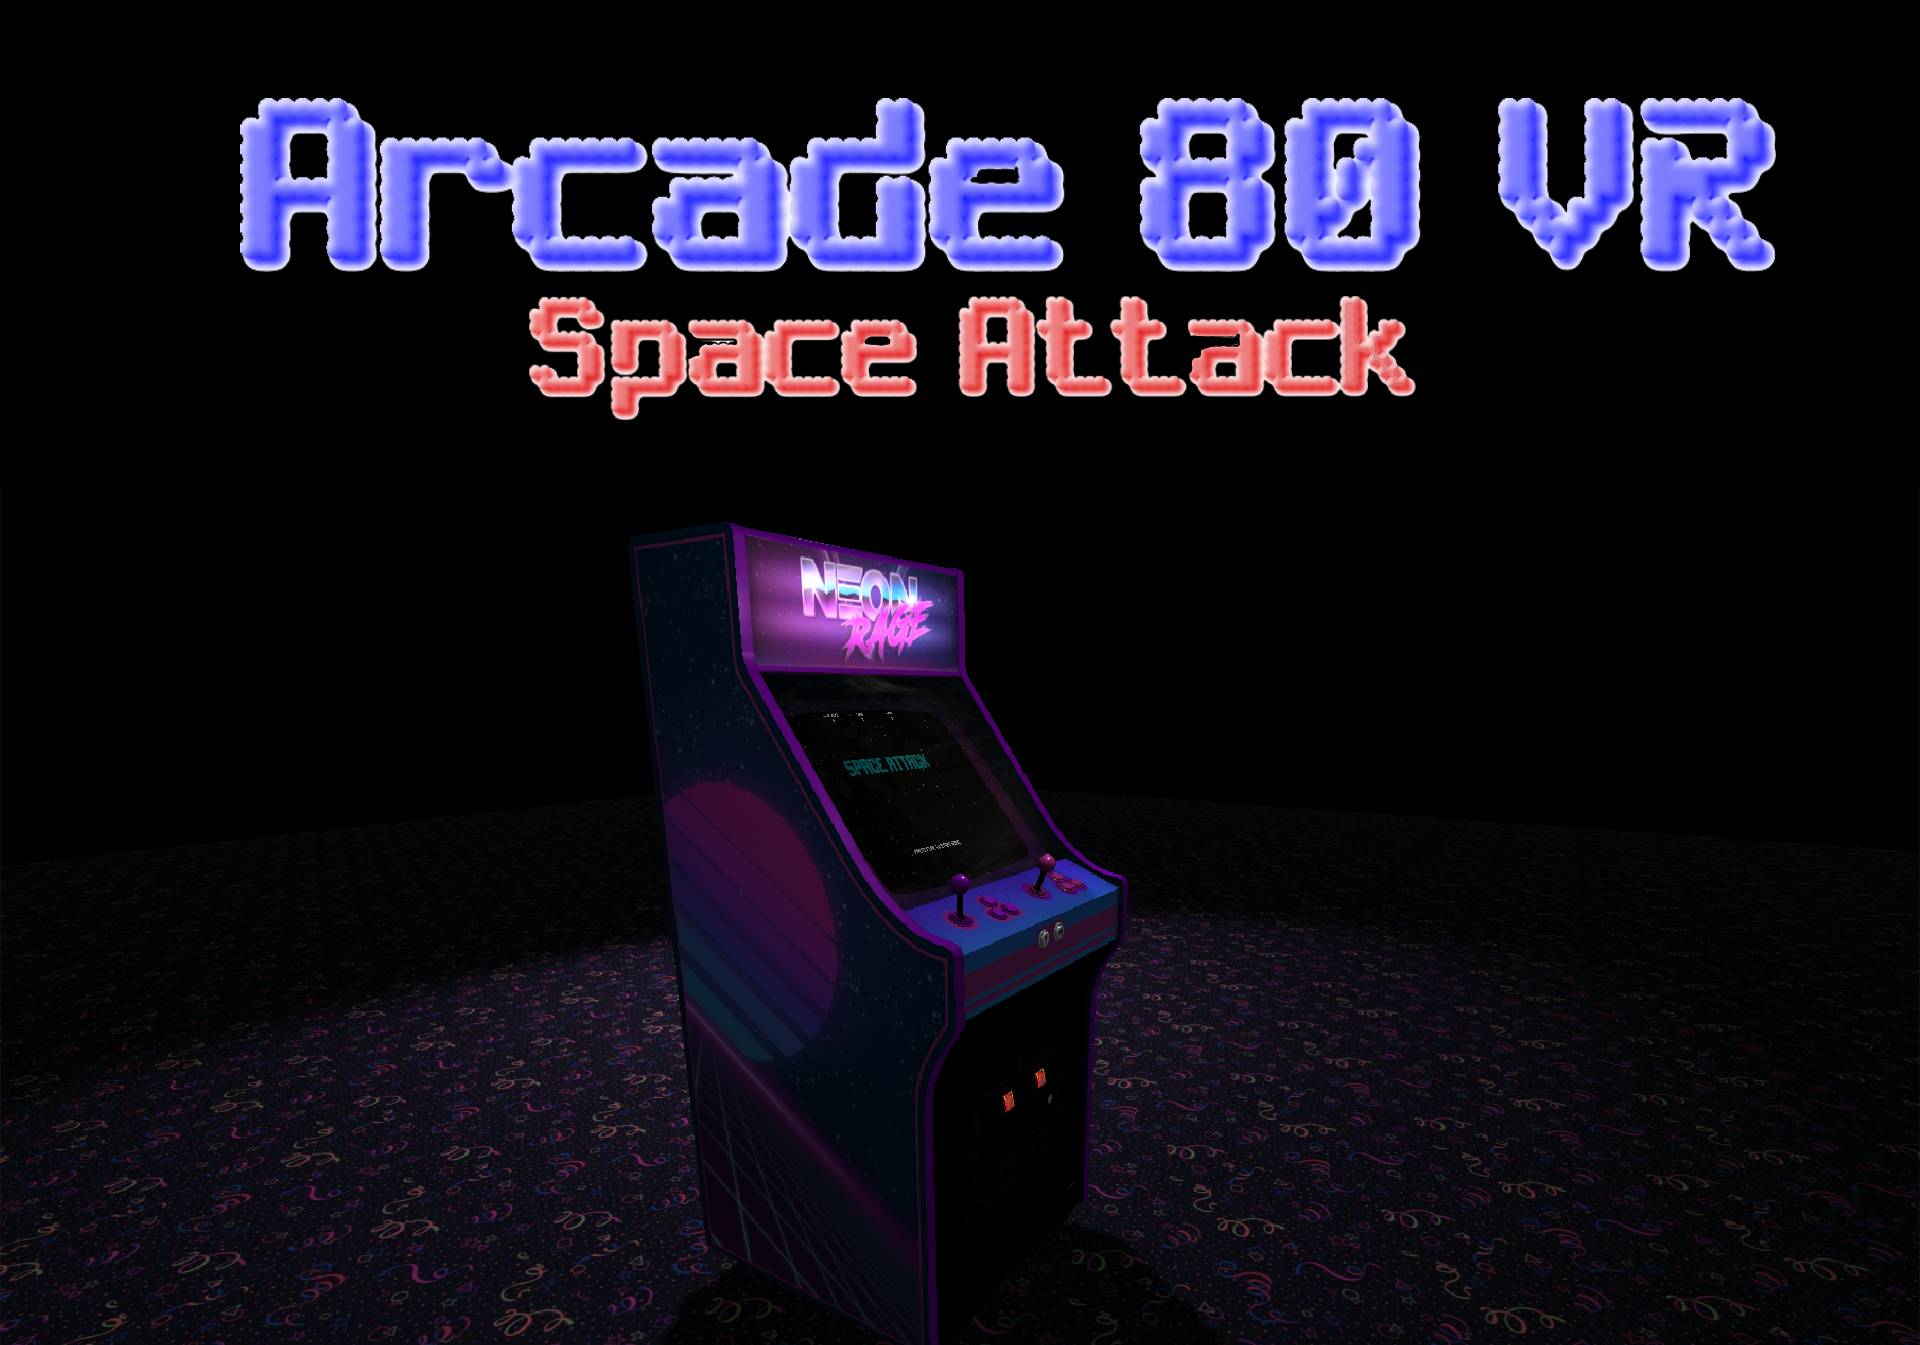 Arcade 80 VR - Space Attack